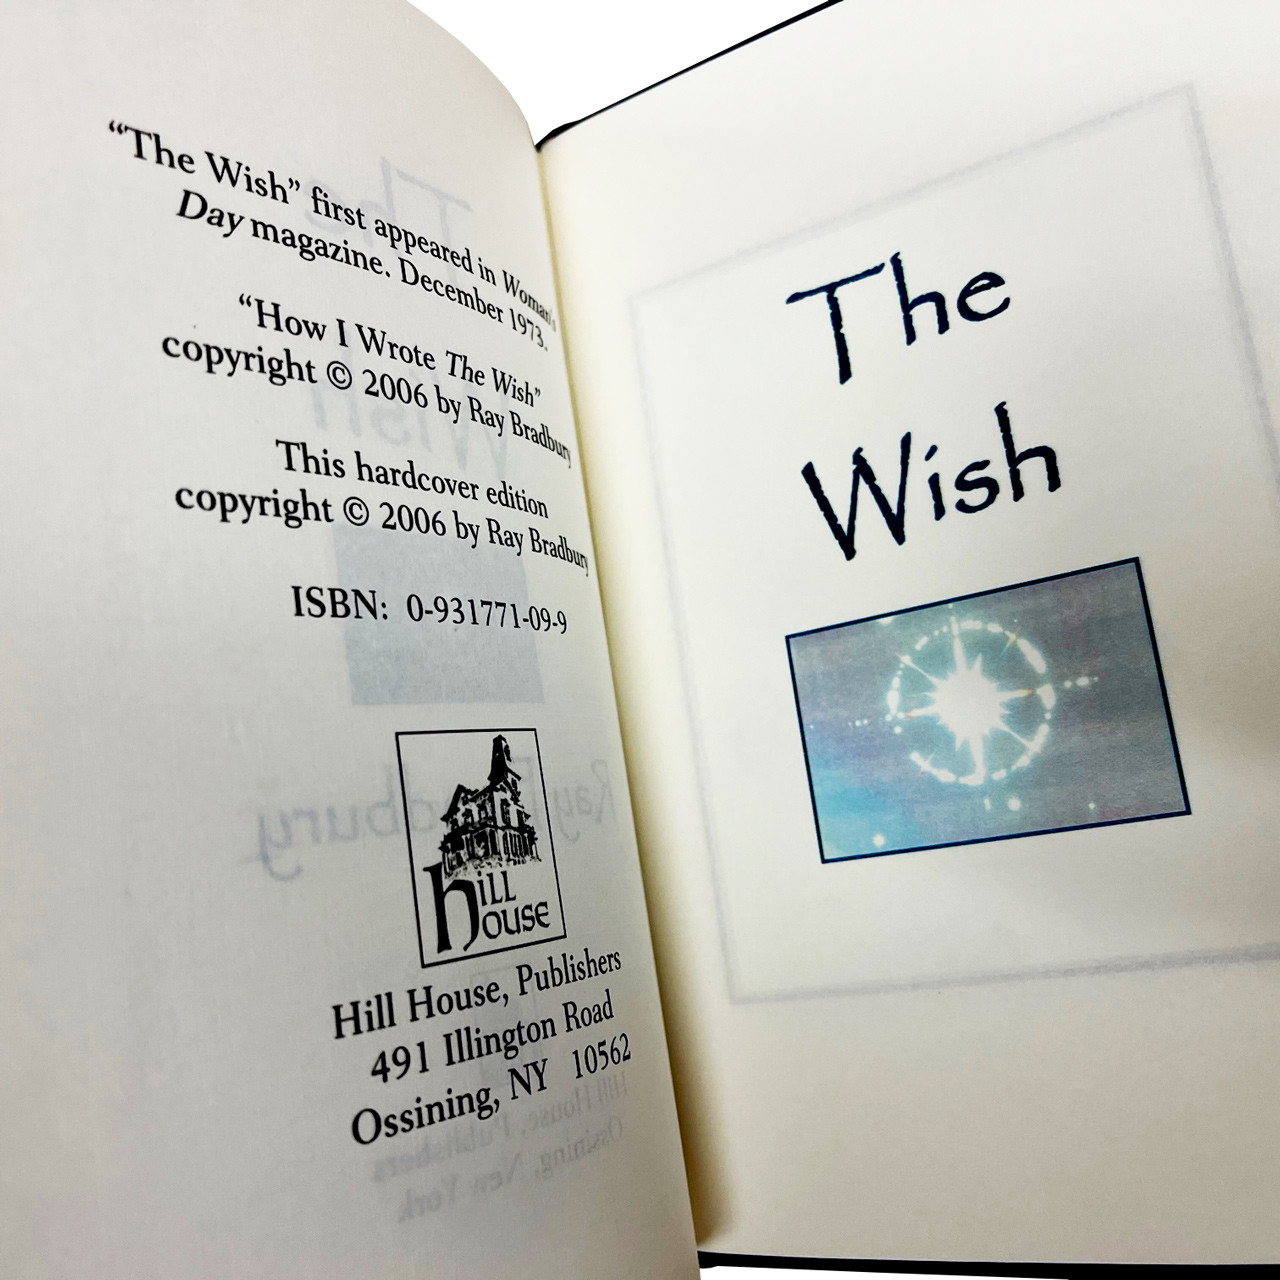 Ray Bradbury "The Wish" Signed Limited Edition No. 46 of 250 [Very Fine]